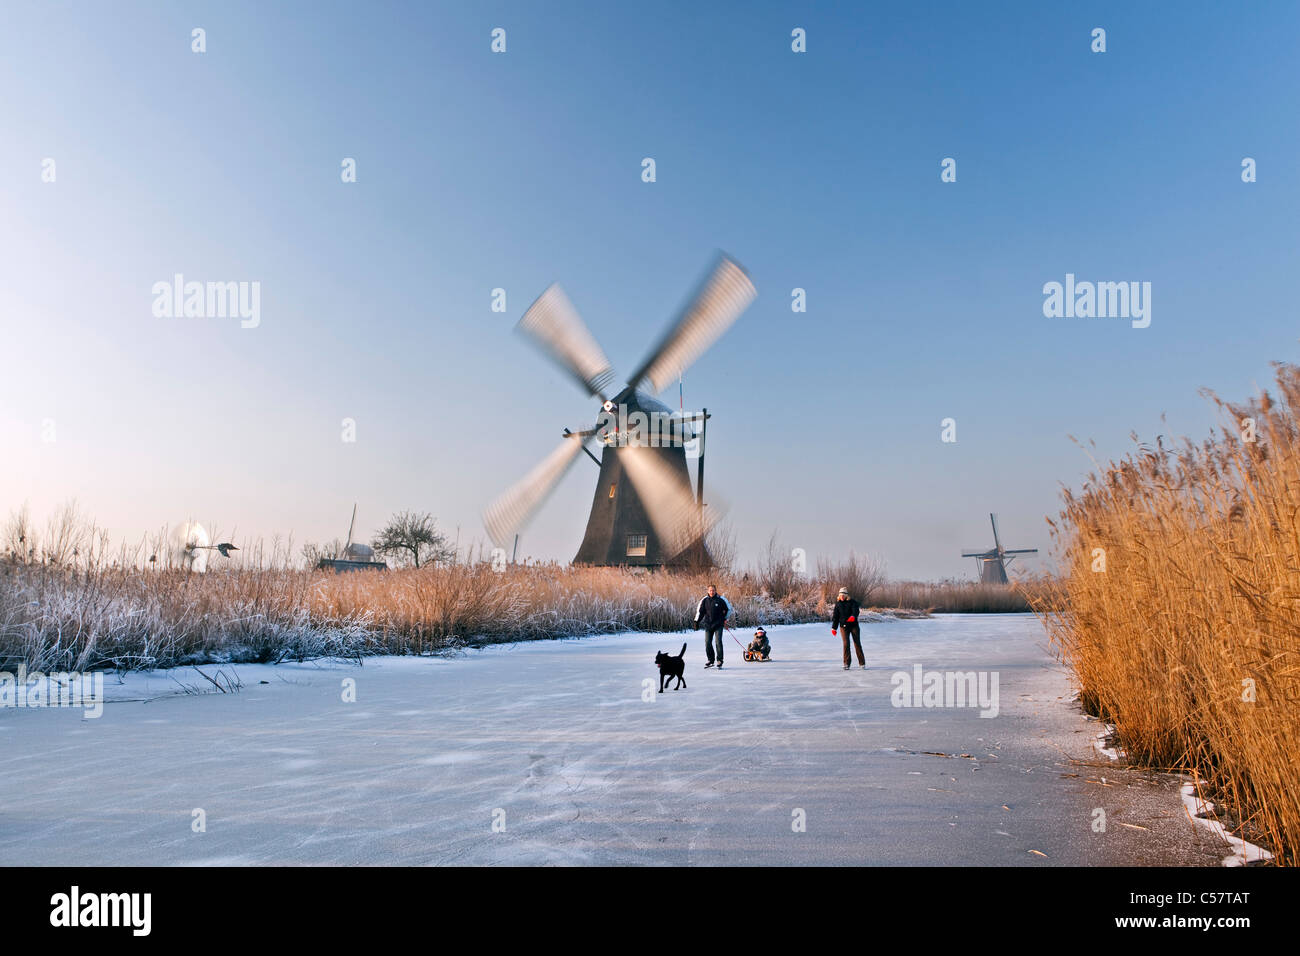 The Netherlands, Kinderdijk, Windmills, Unesco World Heritage Site. People and dog walking on ice. Stock Photo